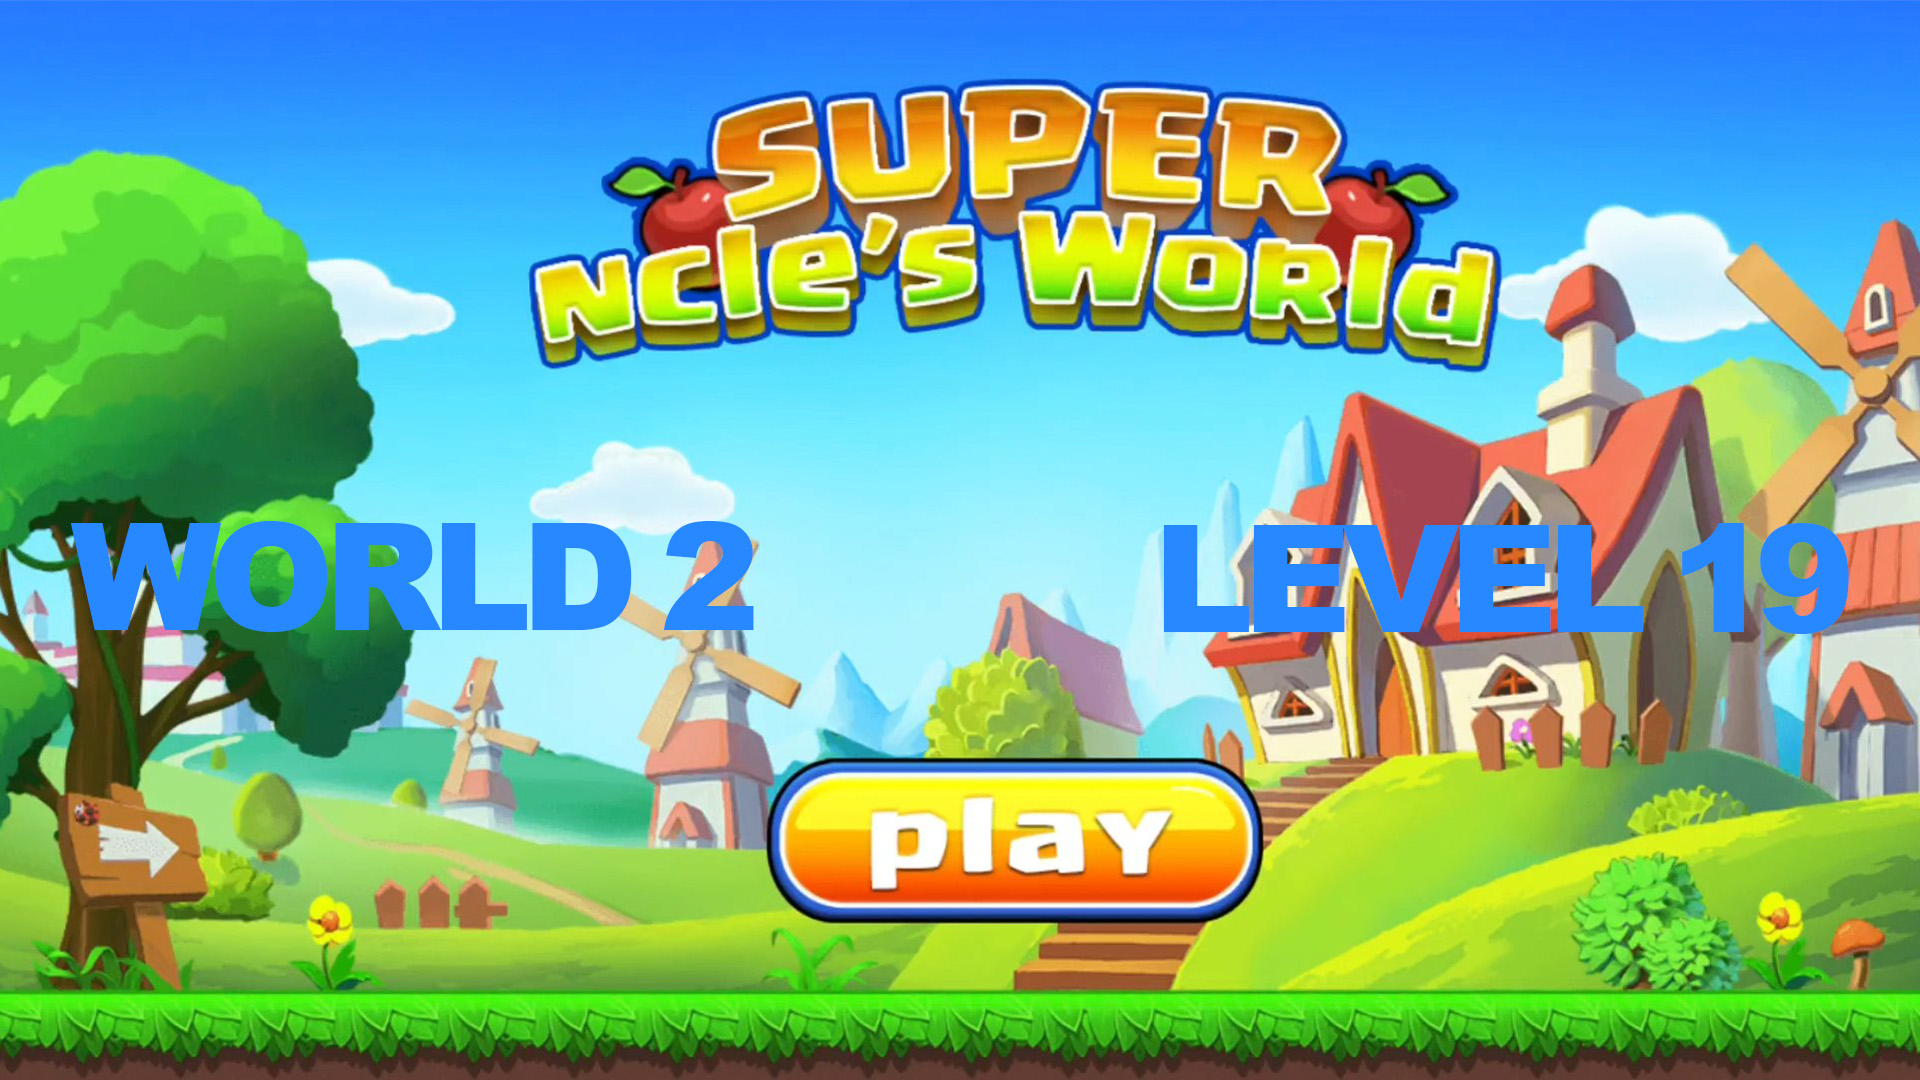 Super ncle's  World 2. level 19.